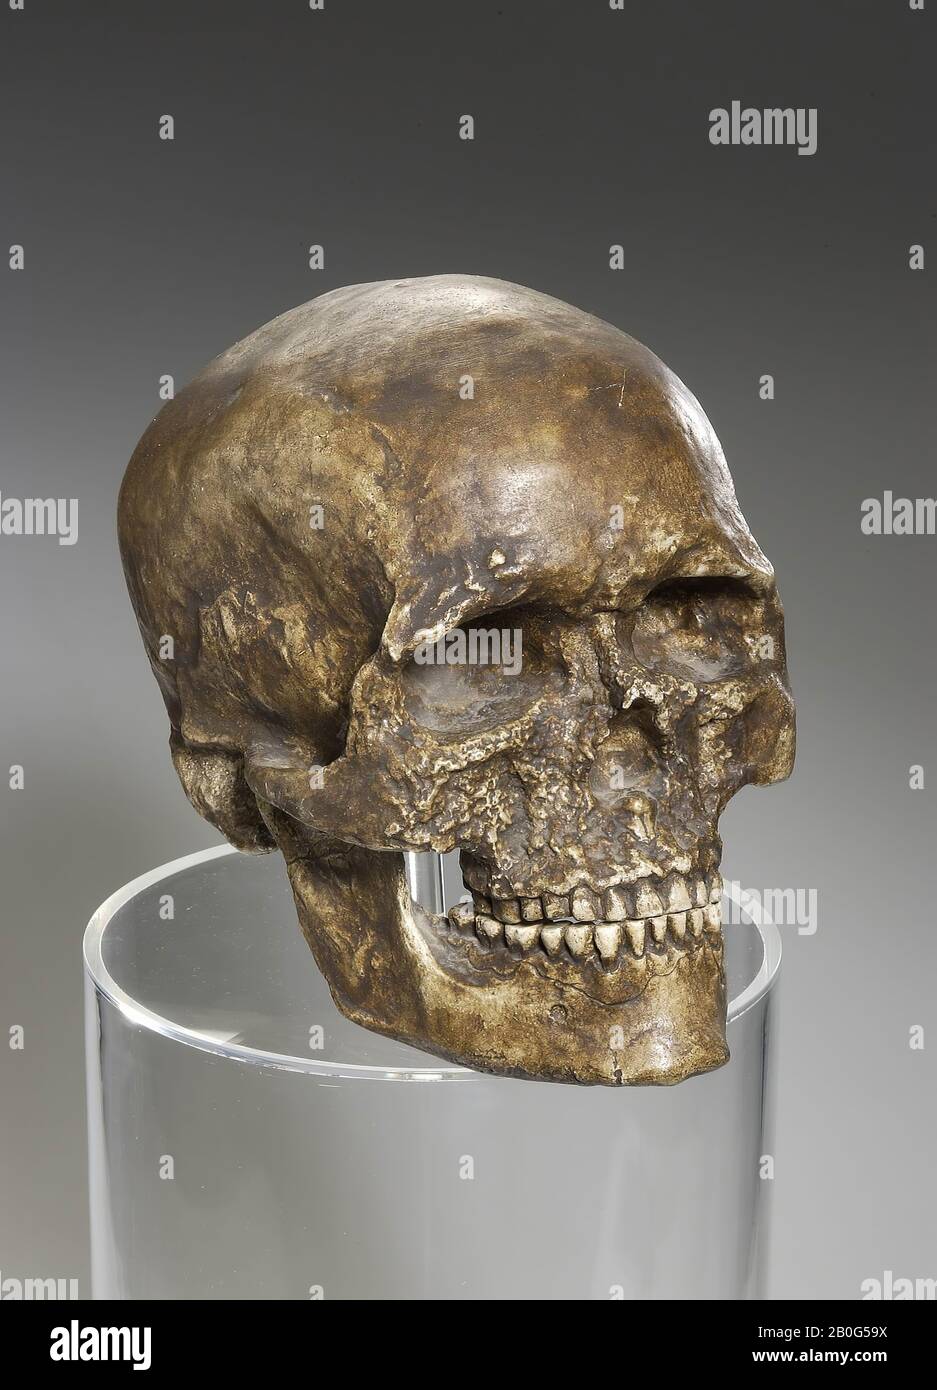 Plaster cast of a skull with lower jaw of a Homo sapiens. Slight surface damage., Casting, skull, plaster, 23 x 15 x 19.5 cm, prehistory, France, Dordogne, Les Eyzies-de-Tayac, Cro Magnon Stock Photo